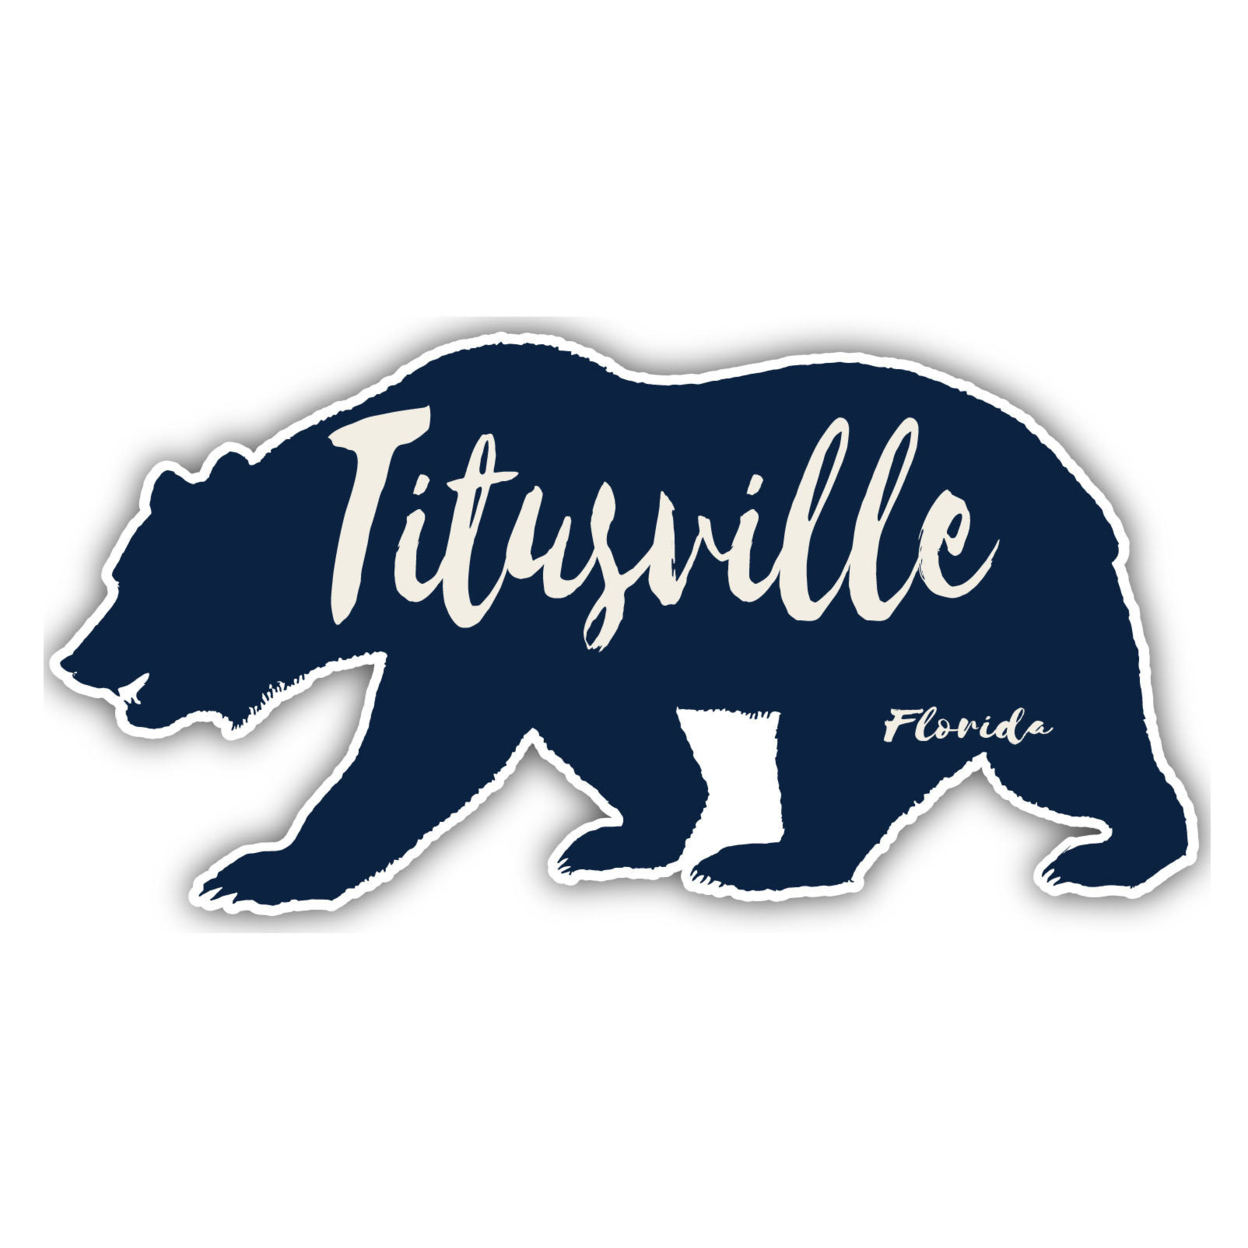 Titusville Florida Souvenir Decorative Stickers (Choose Theme And Size) - Single Unit, 2-Inch, Tent